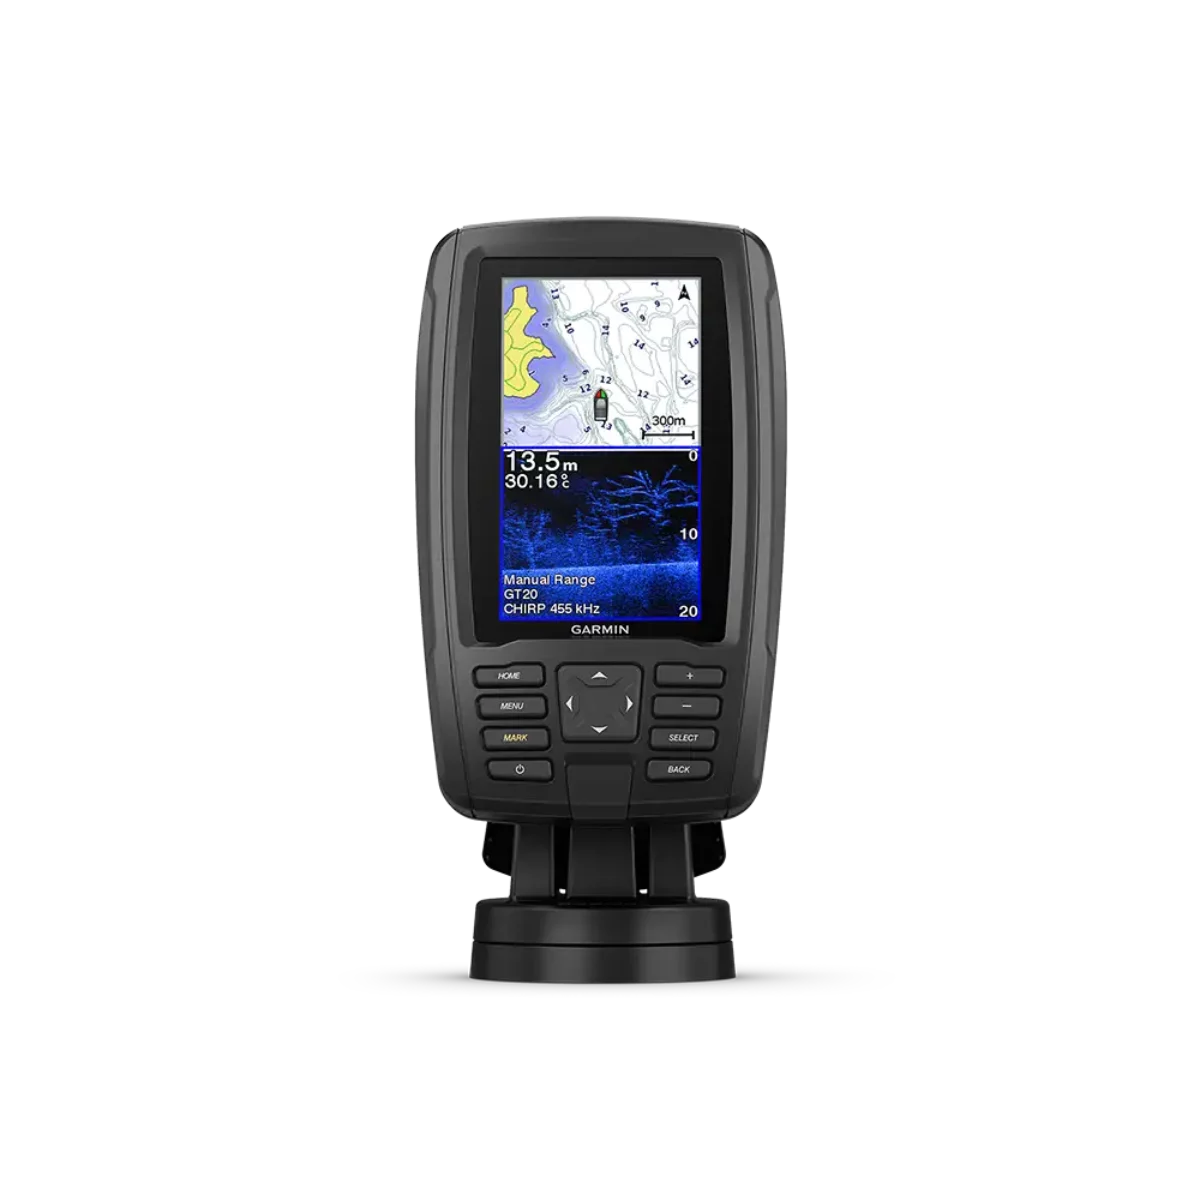 Garmin echoMAP Plus 45cv split screen view with sonar and charts